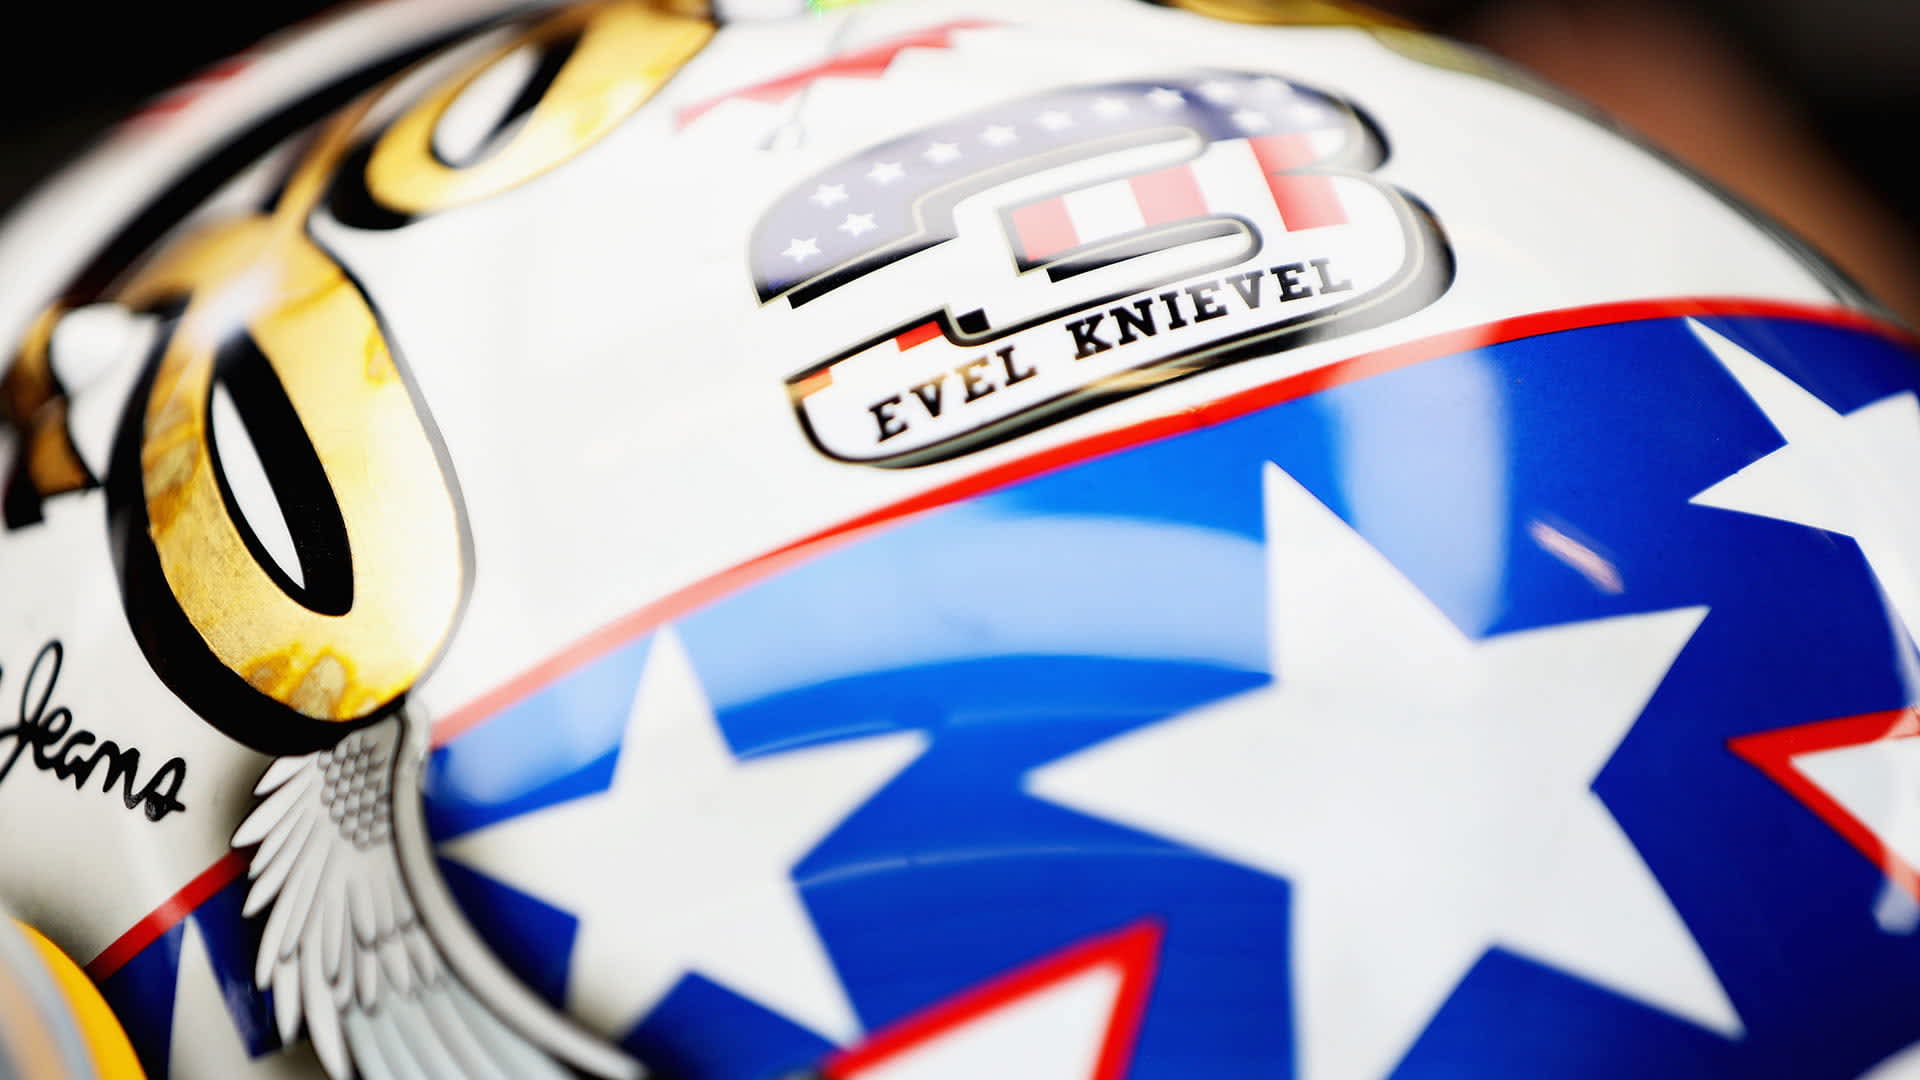 Detail shot showing the Evel Knievel branding on helmet